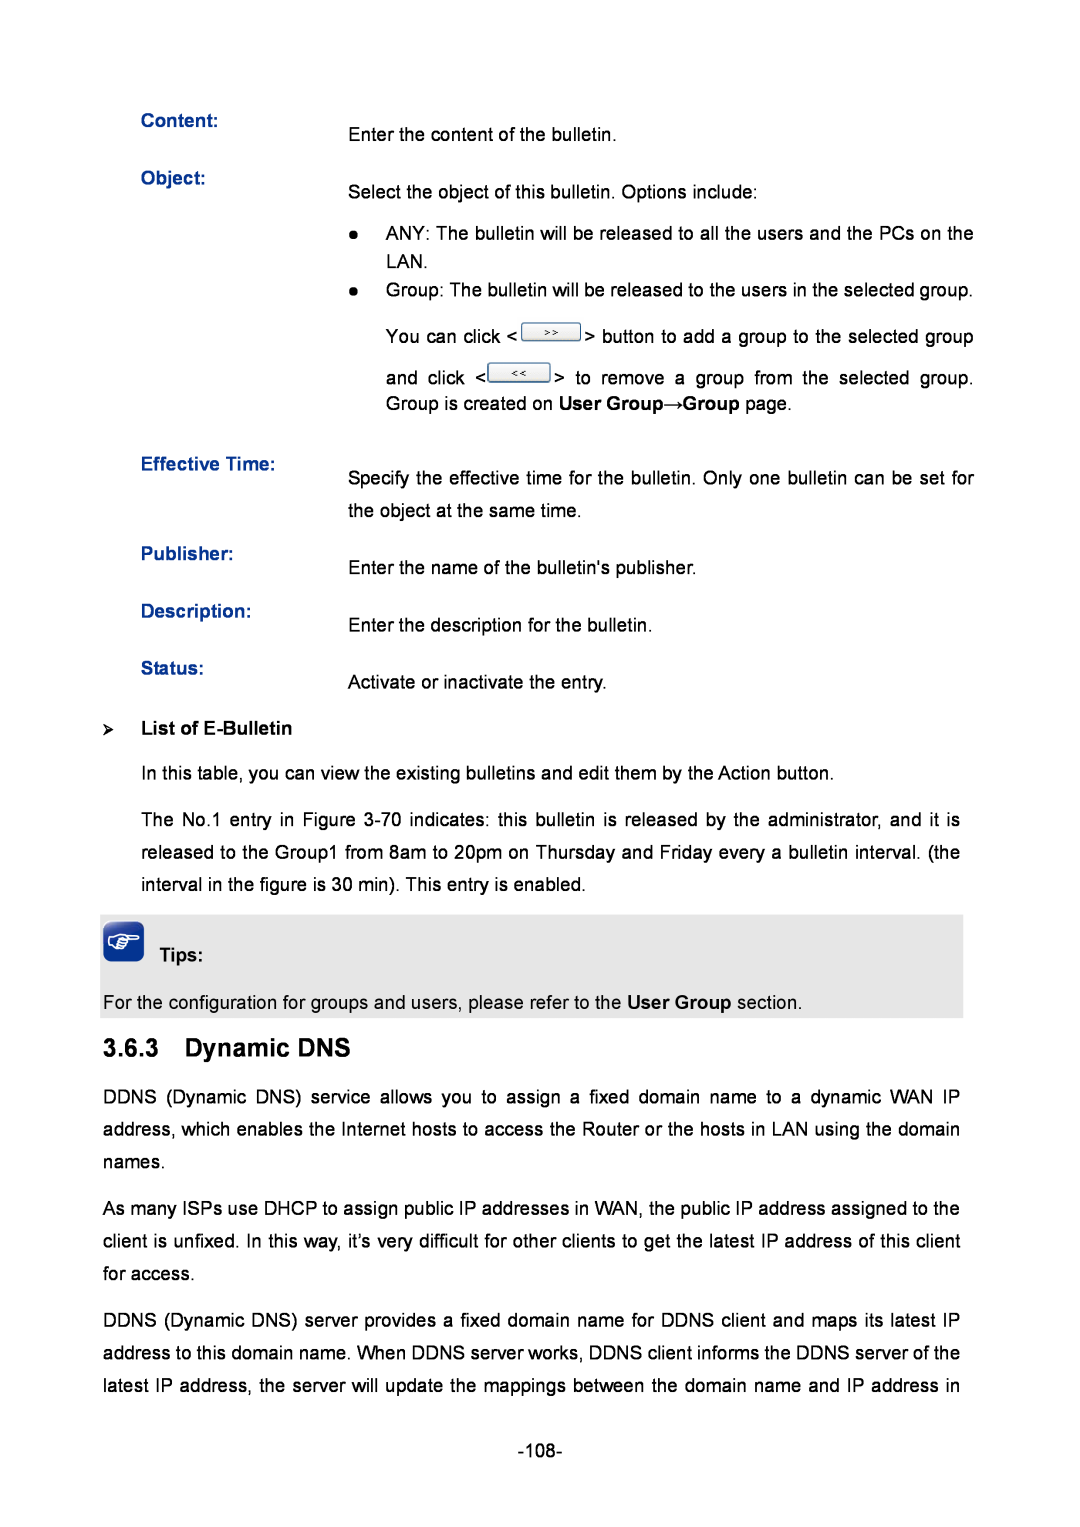 TP-Link TL-ER6120 Dynamic DNS, ¾ List of E-Bulletin, Content Object Effective Time Publisher Description Status, Tips 